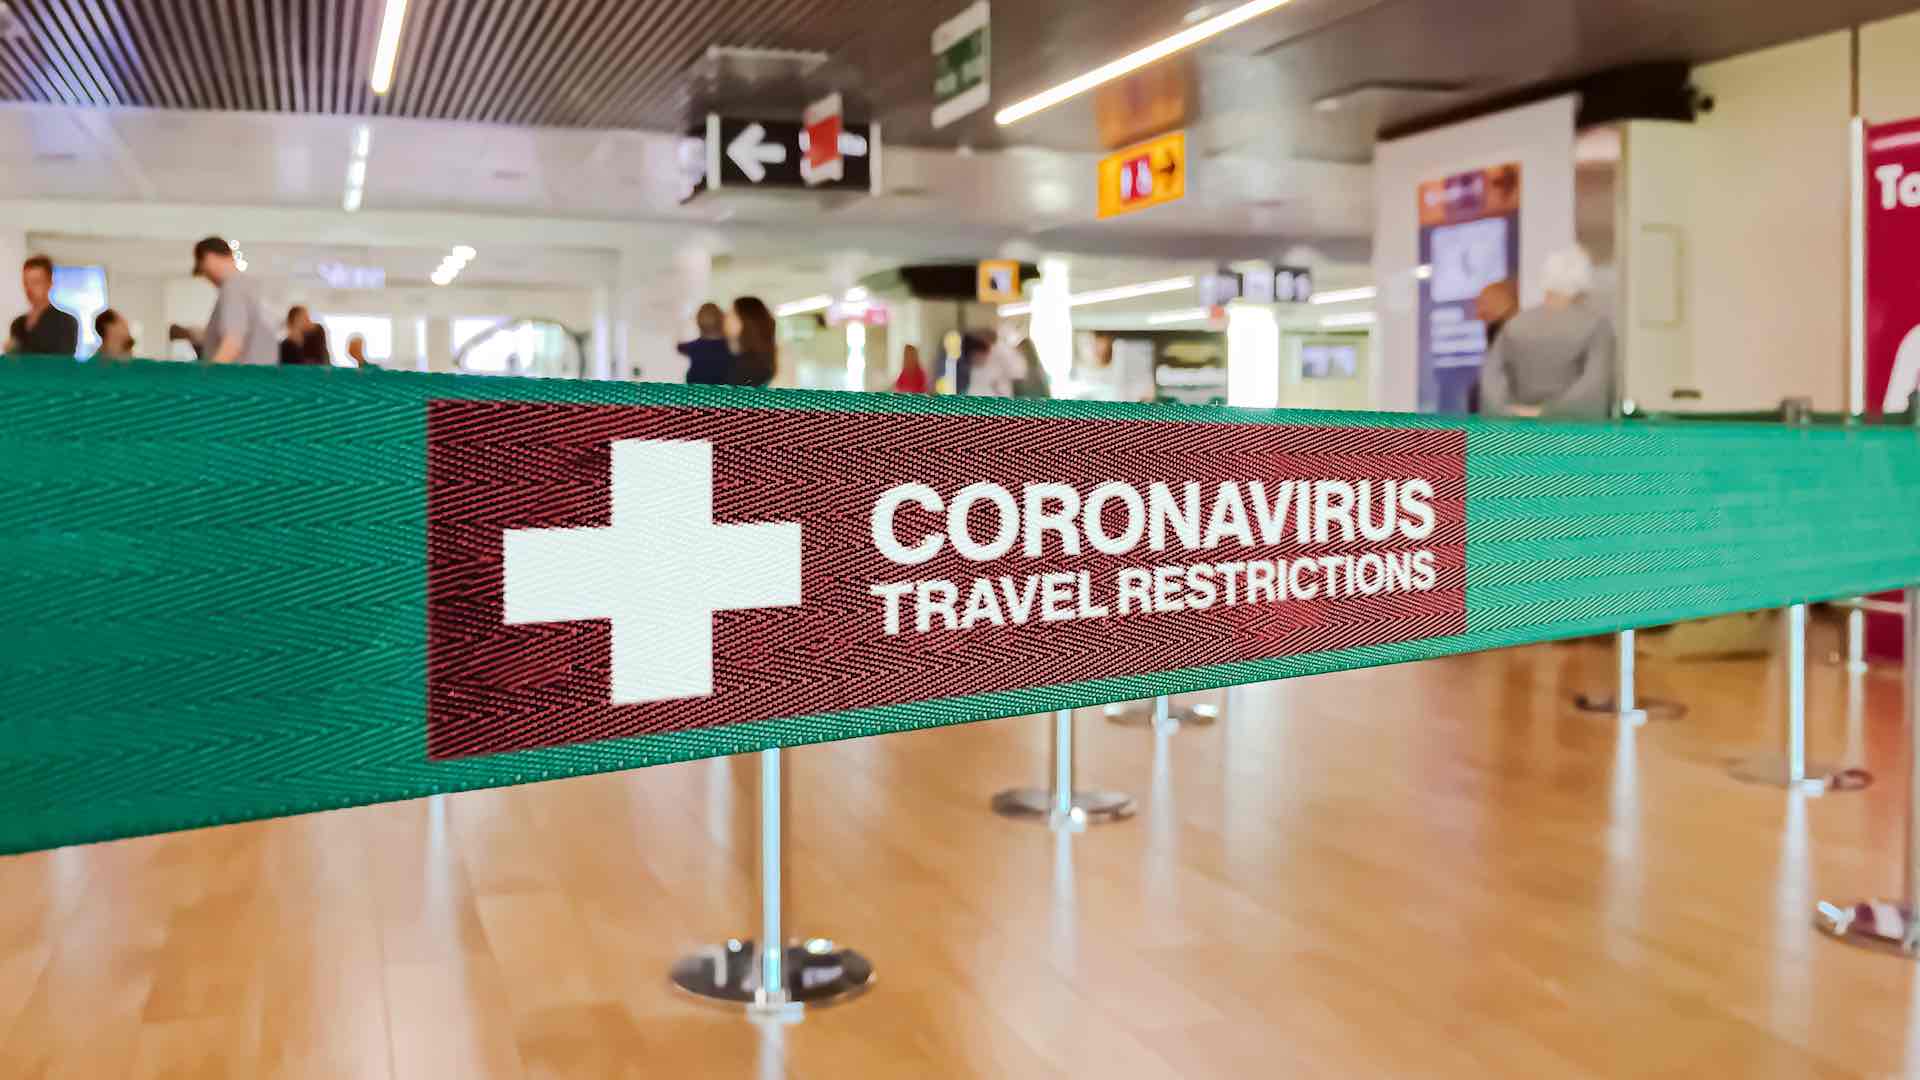 coronavirus travel restrictions sign at airport